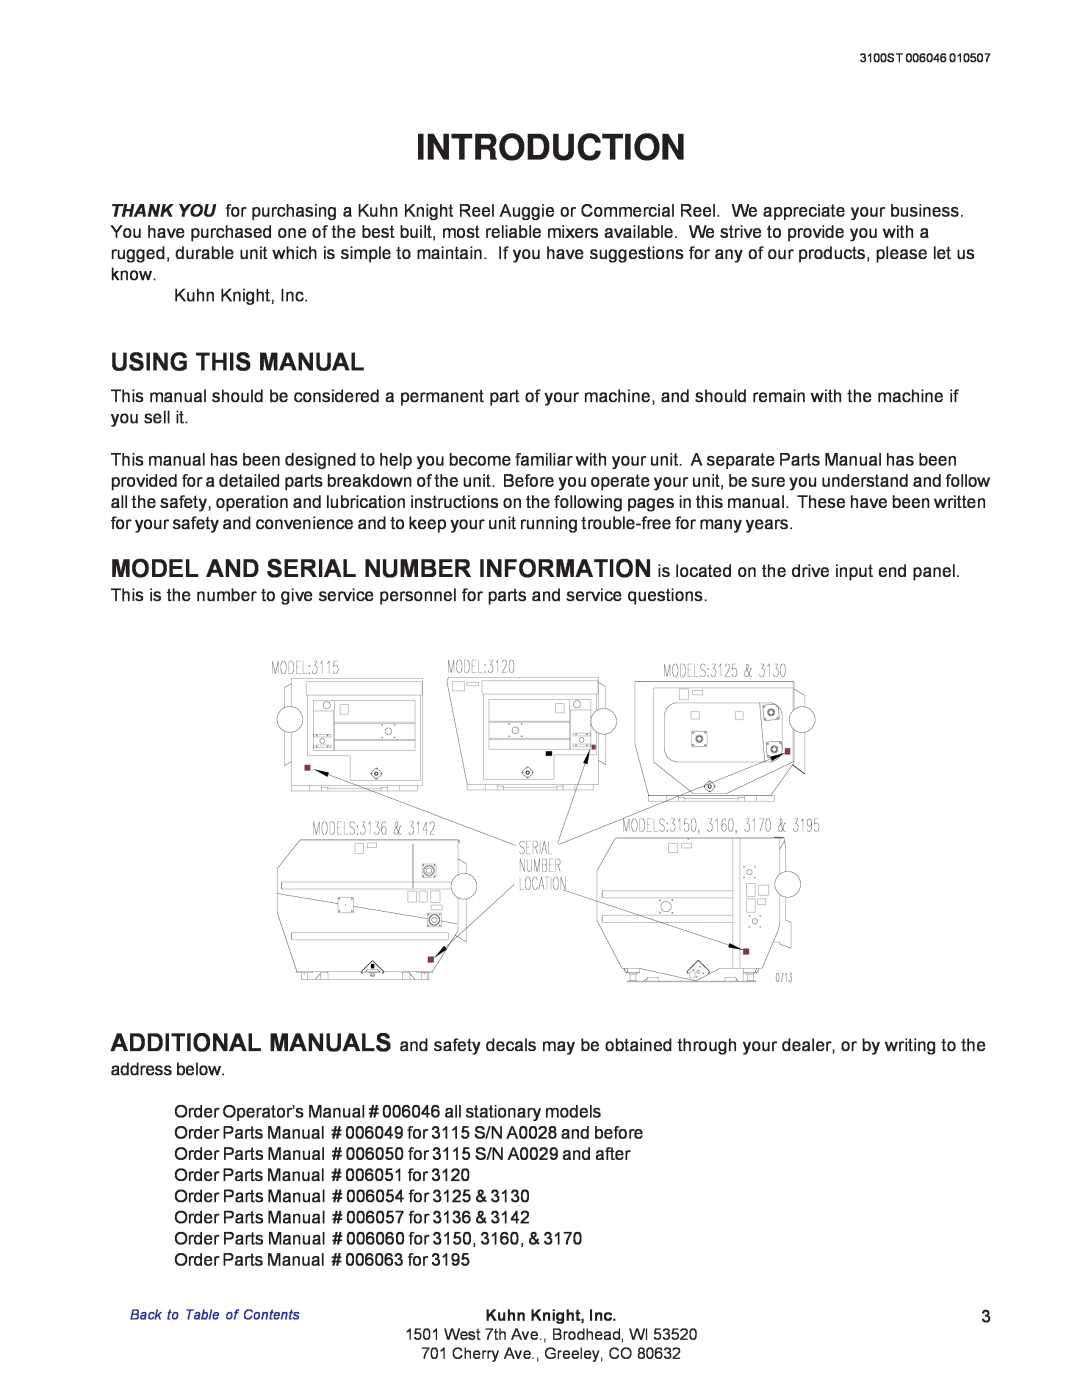 Kuhn Rikon 3100 instruction manual Introduction, Using This Manual, Additional Manuals 